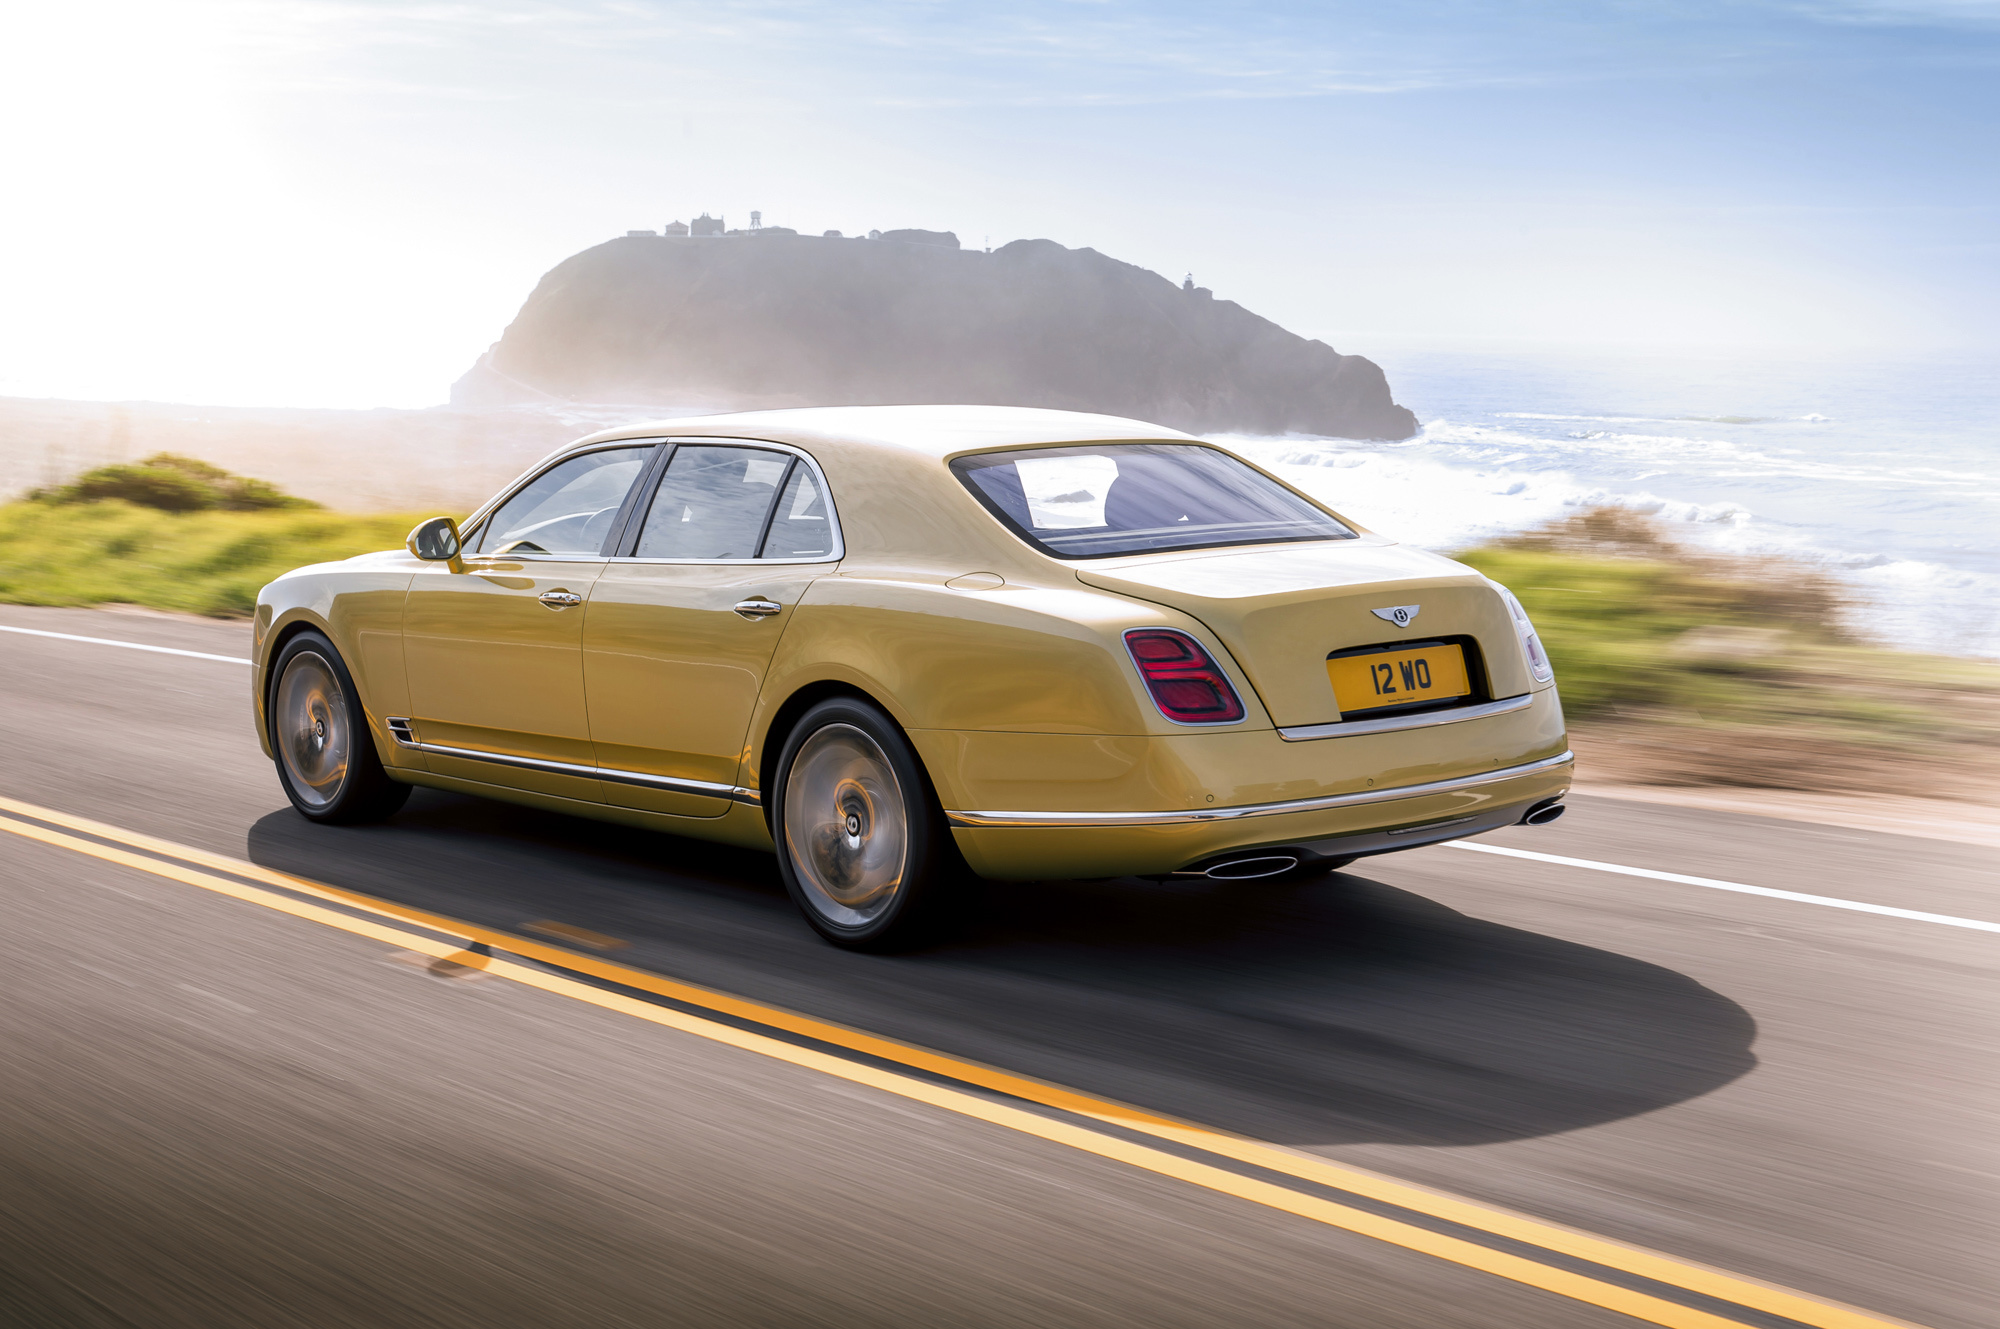 2017 Bentley Mulsanne Extended Wheelbase: роскошь и комфорт последней модели от Bentley